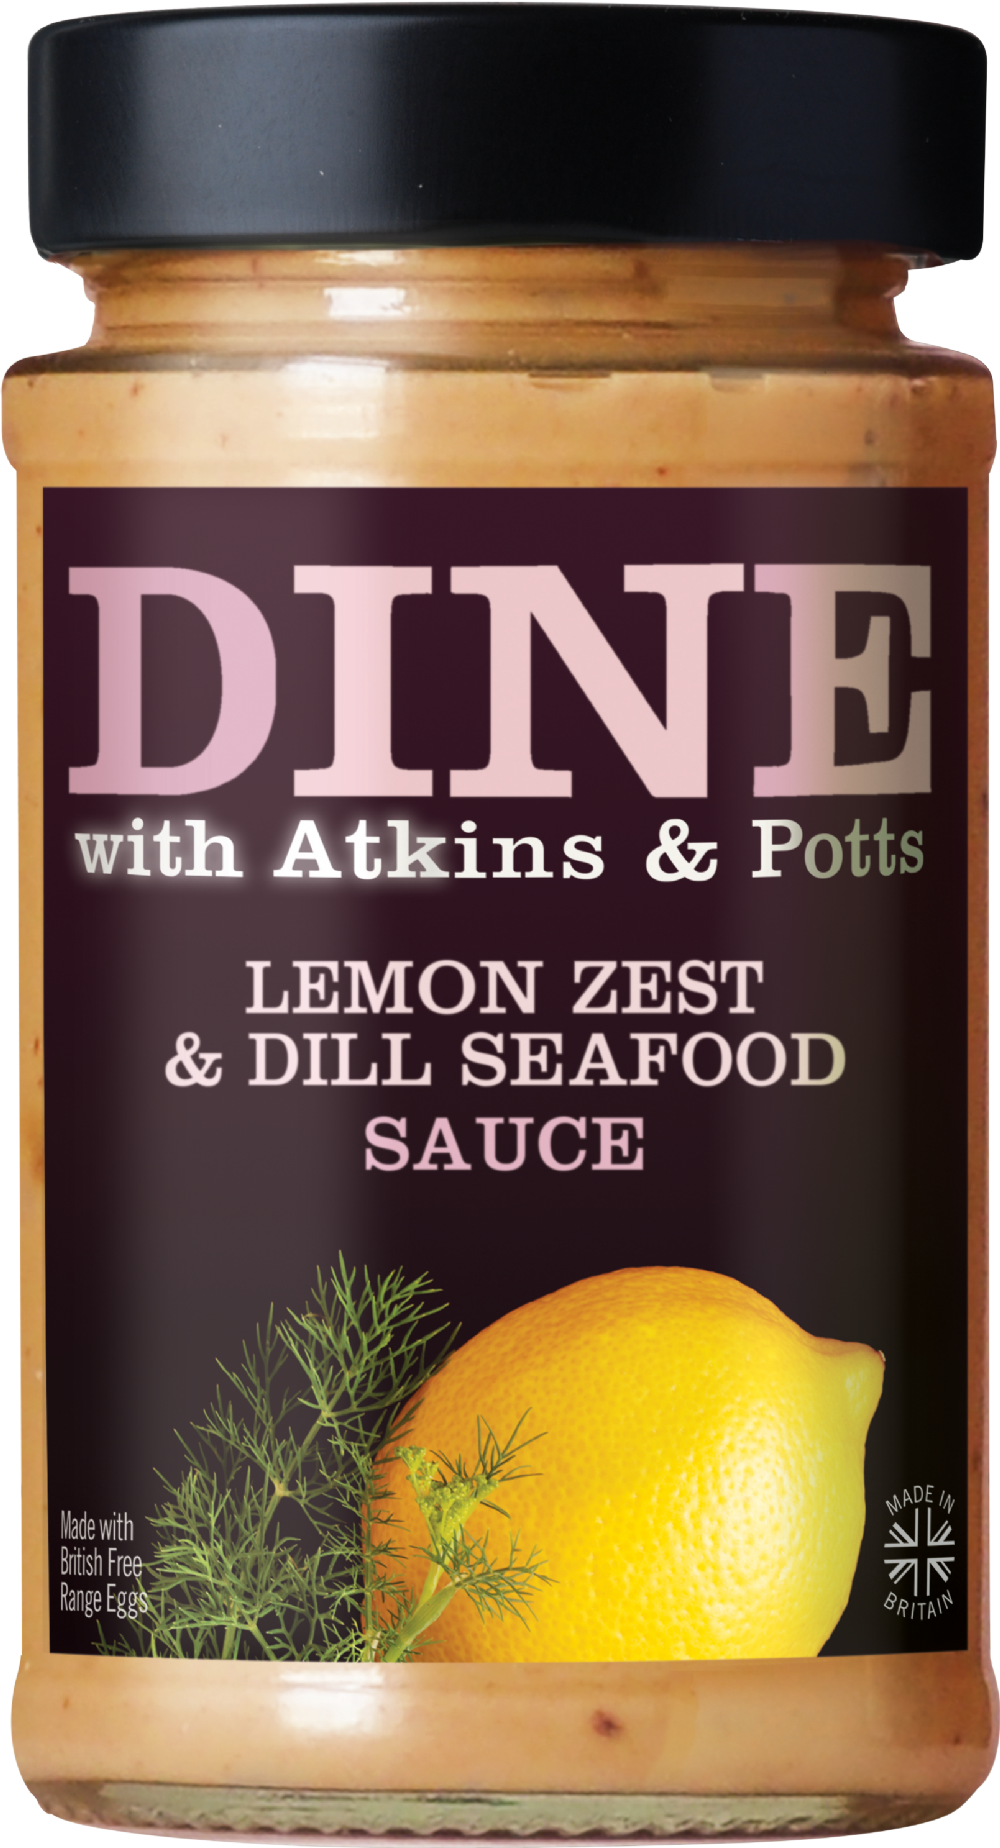 ATKINS & POTTS Lemon Zest & Dill Seafood Sauce 205g